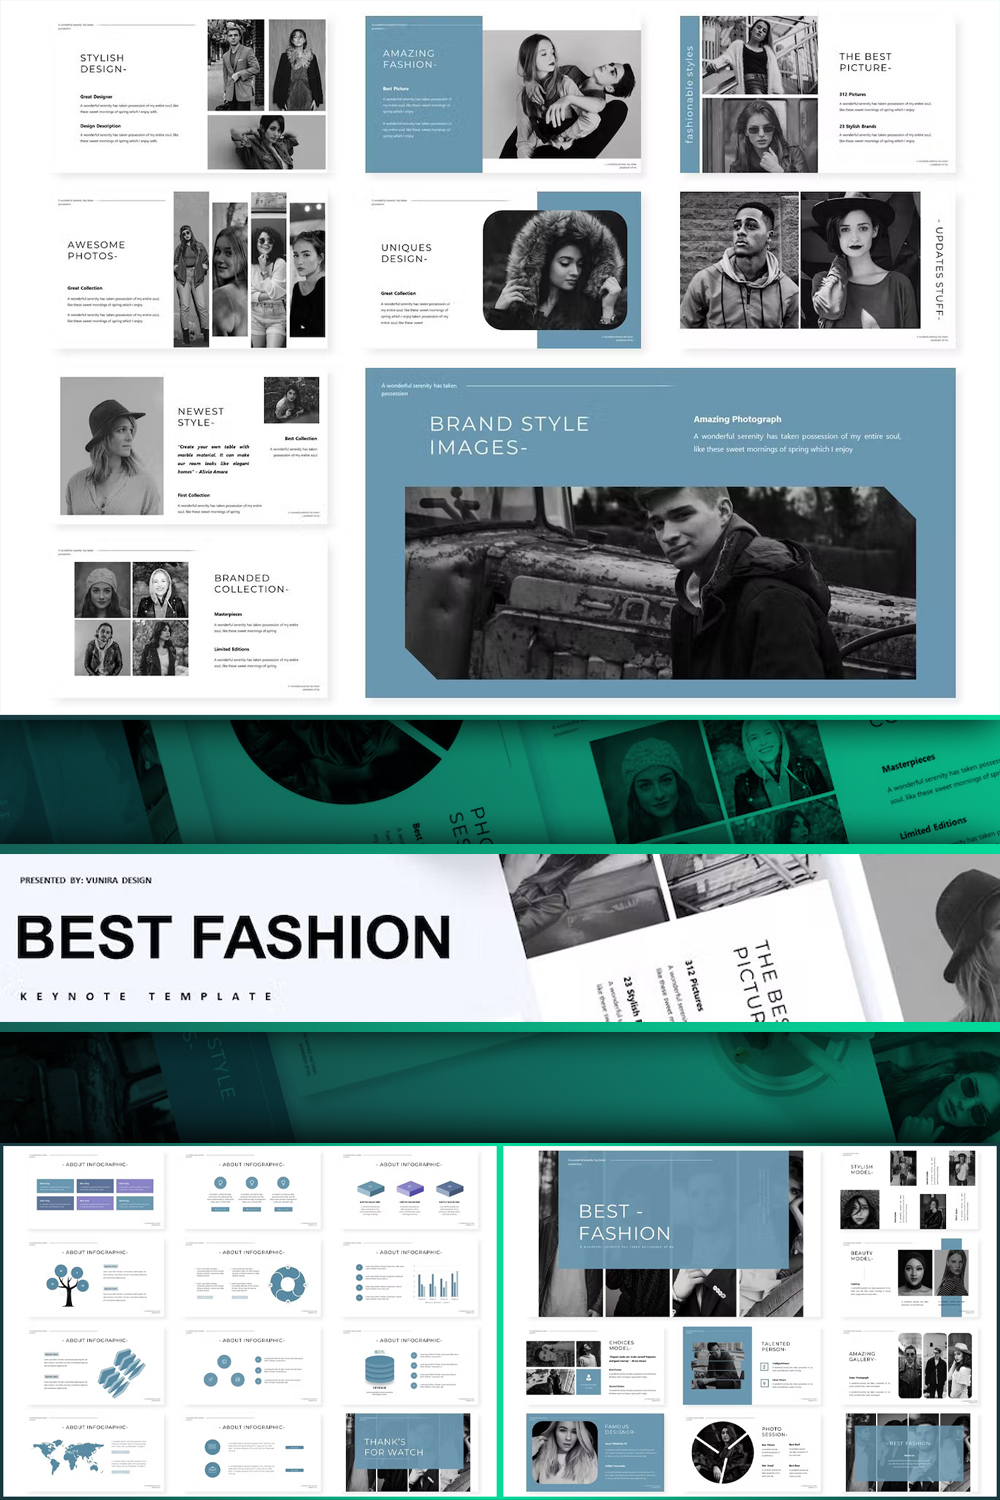 Best Fashion | Keynote Template - Pinterest.